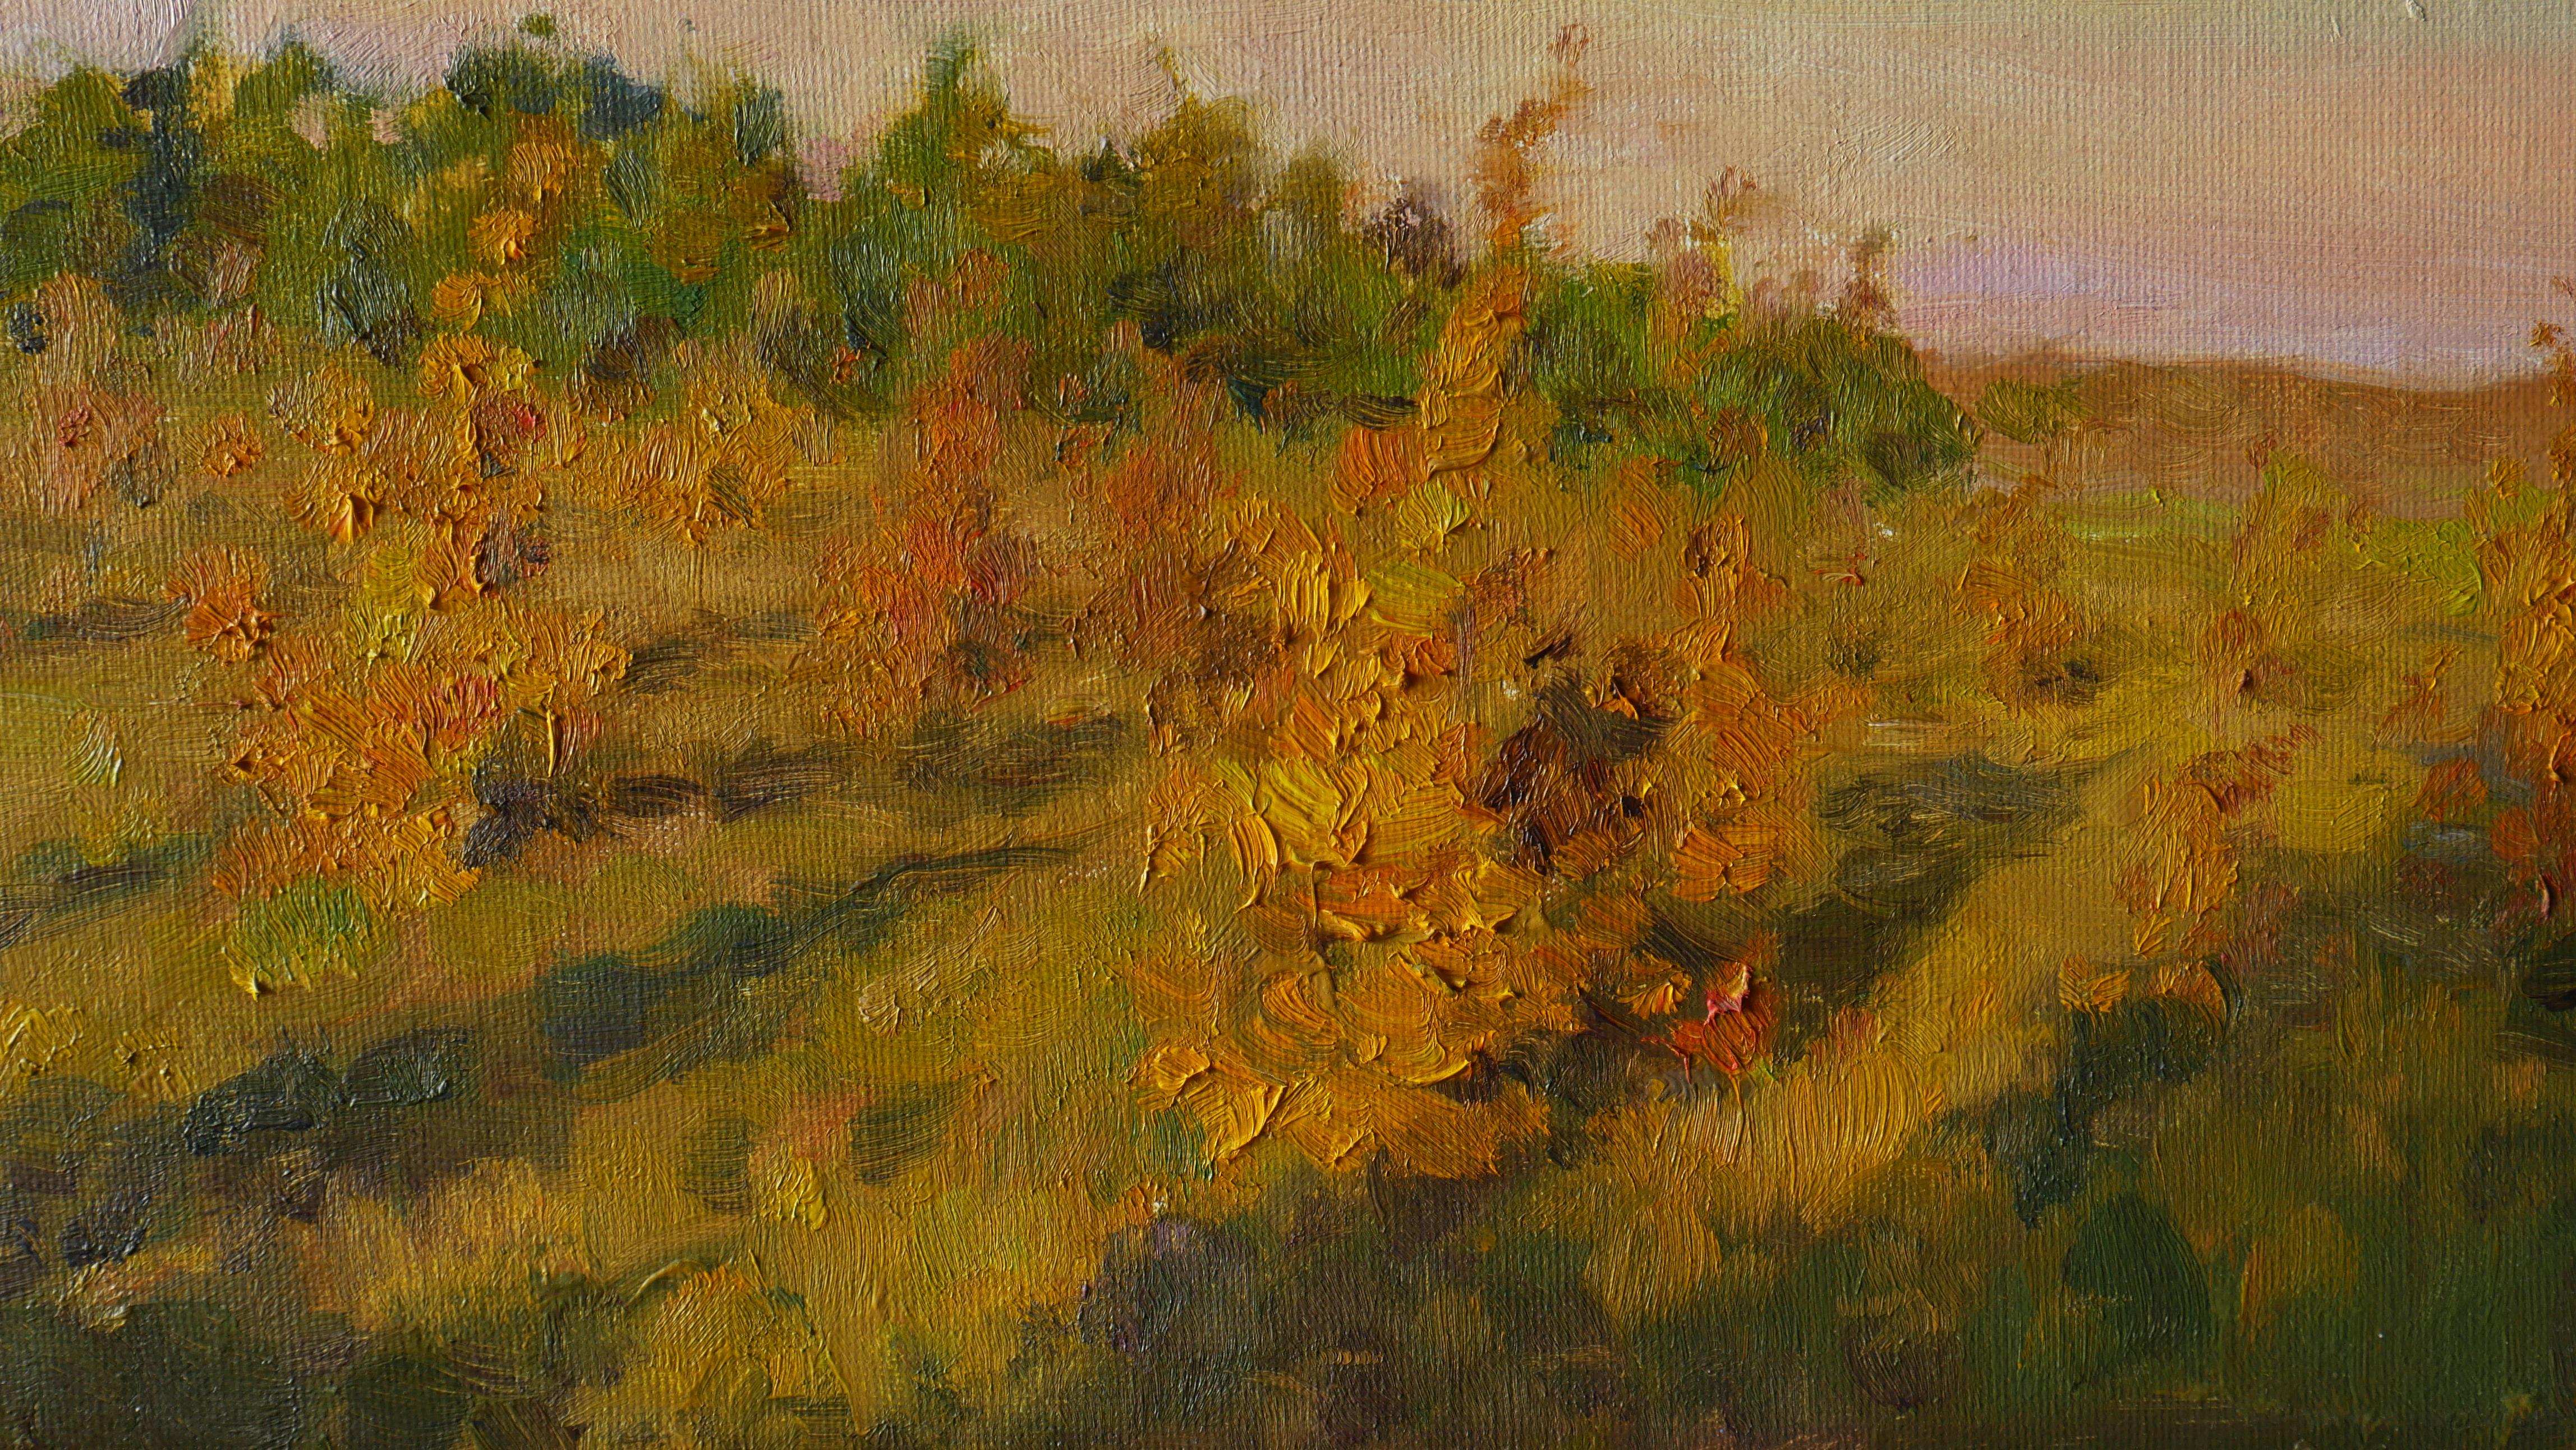 The Autumn Sunset - sunset landscape painting For Sale 4